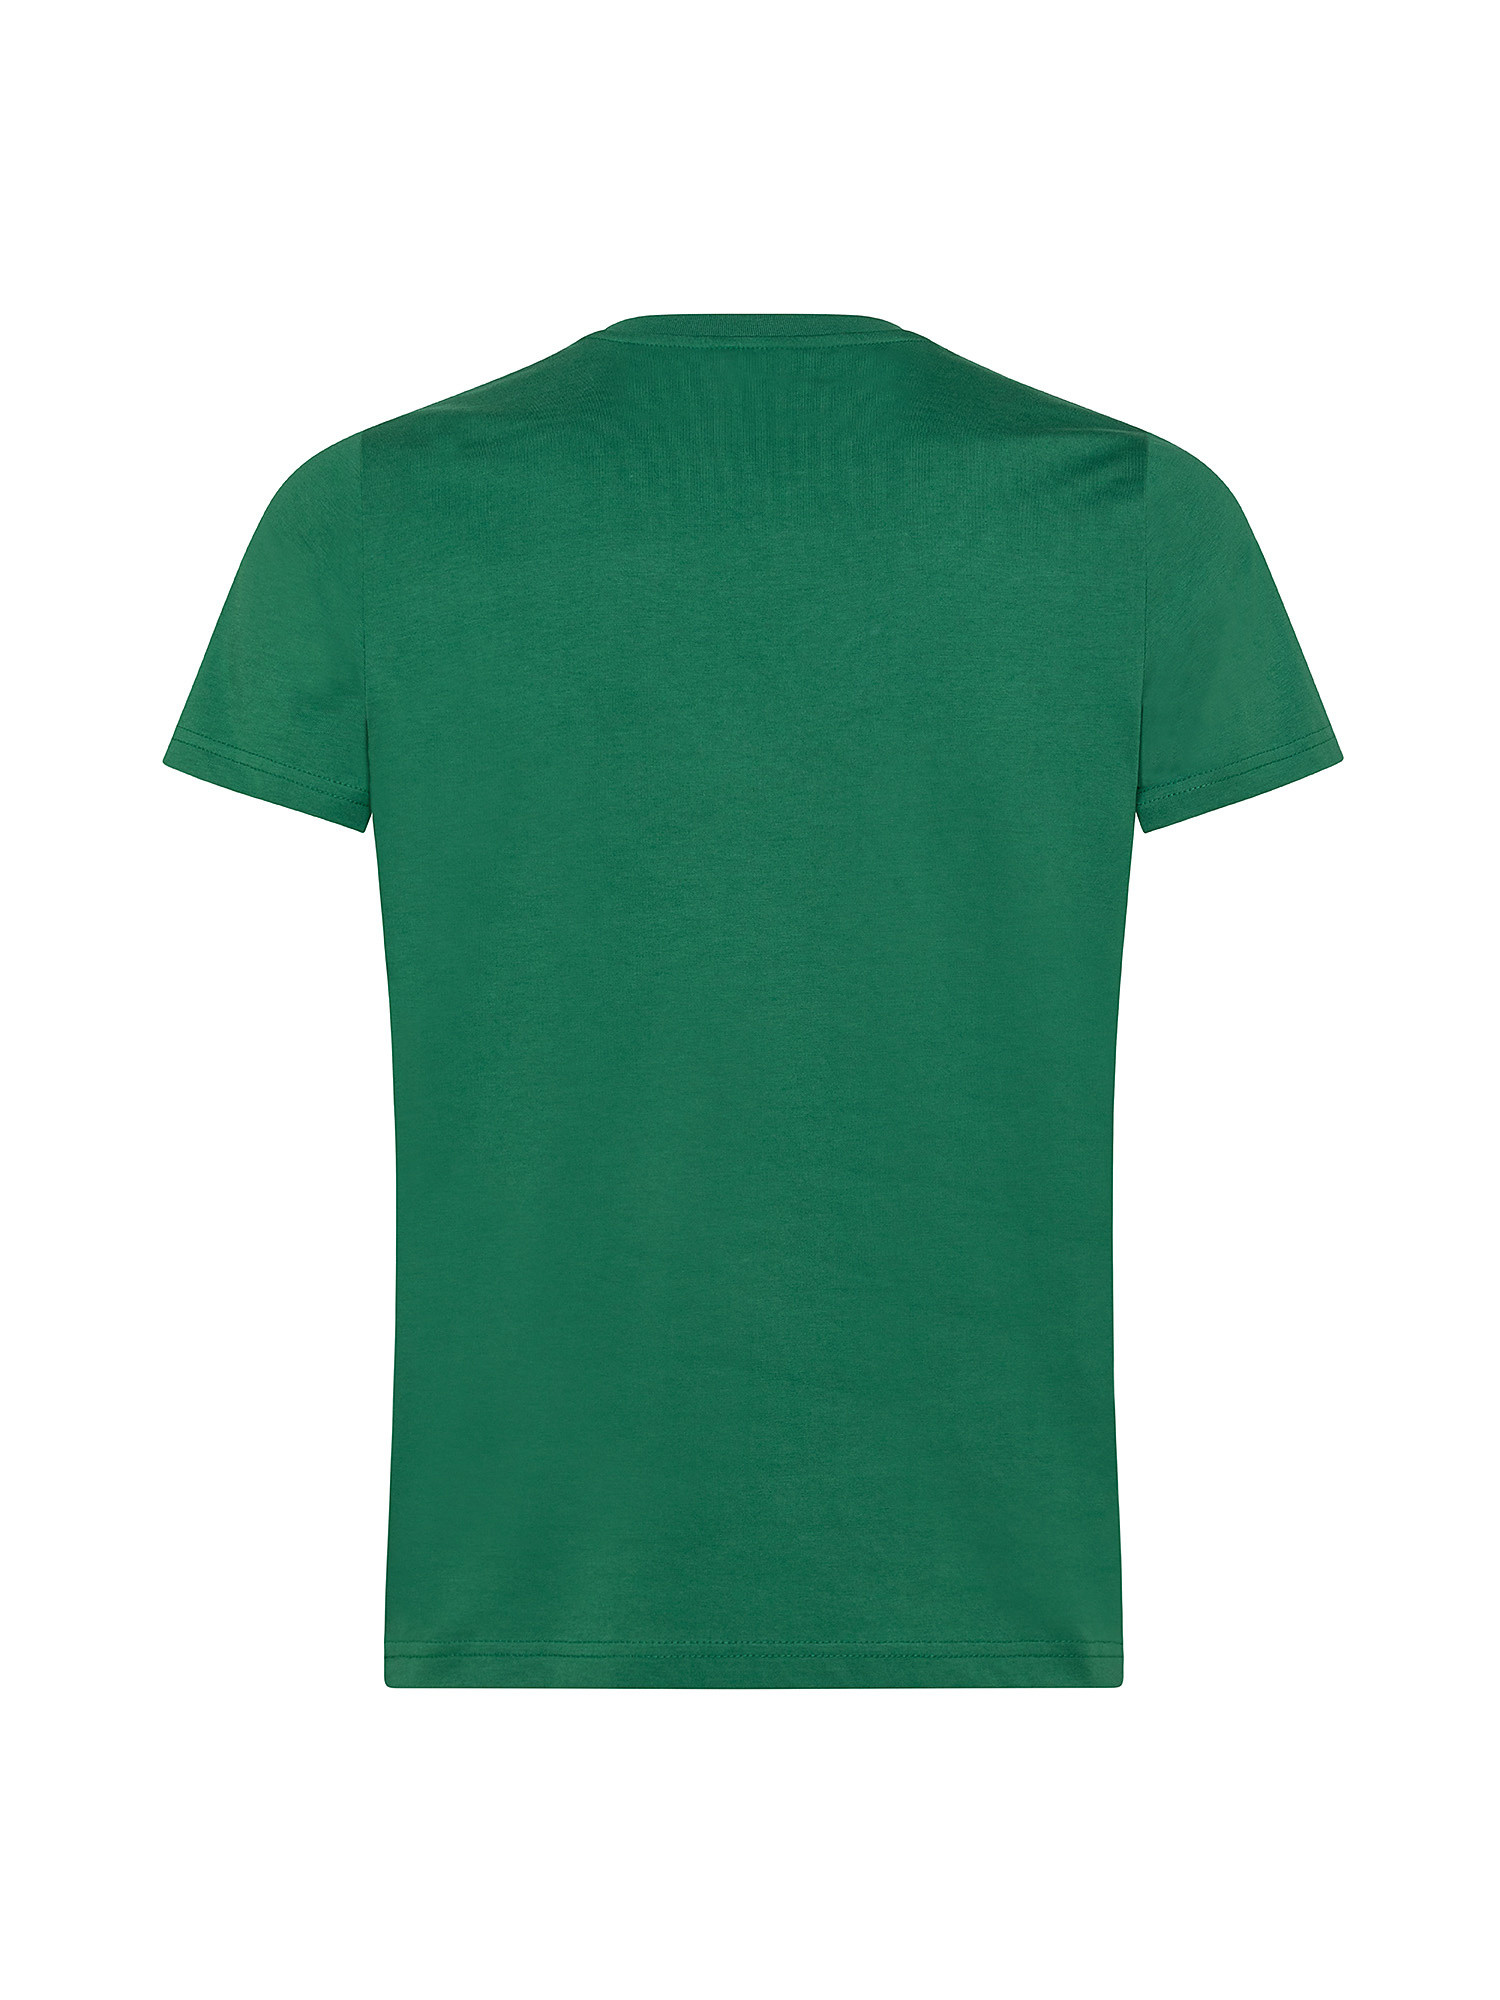 T-shirt slim fit, Verde scuro, large